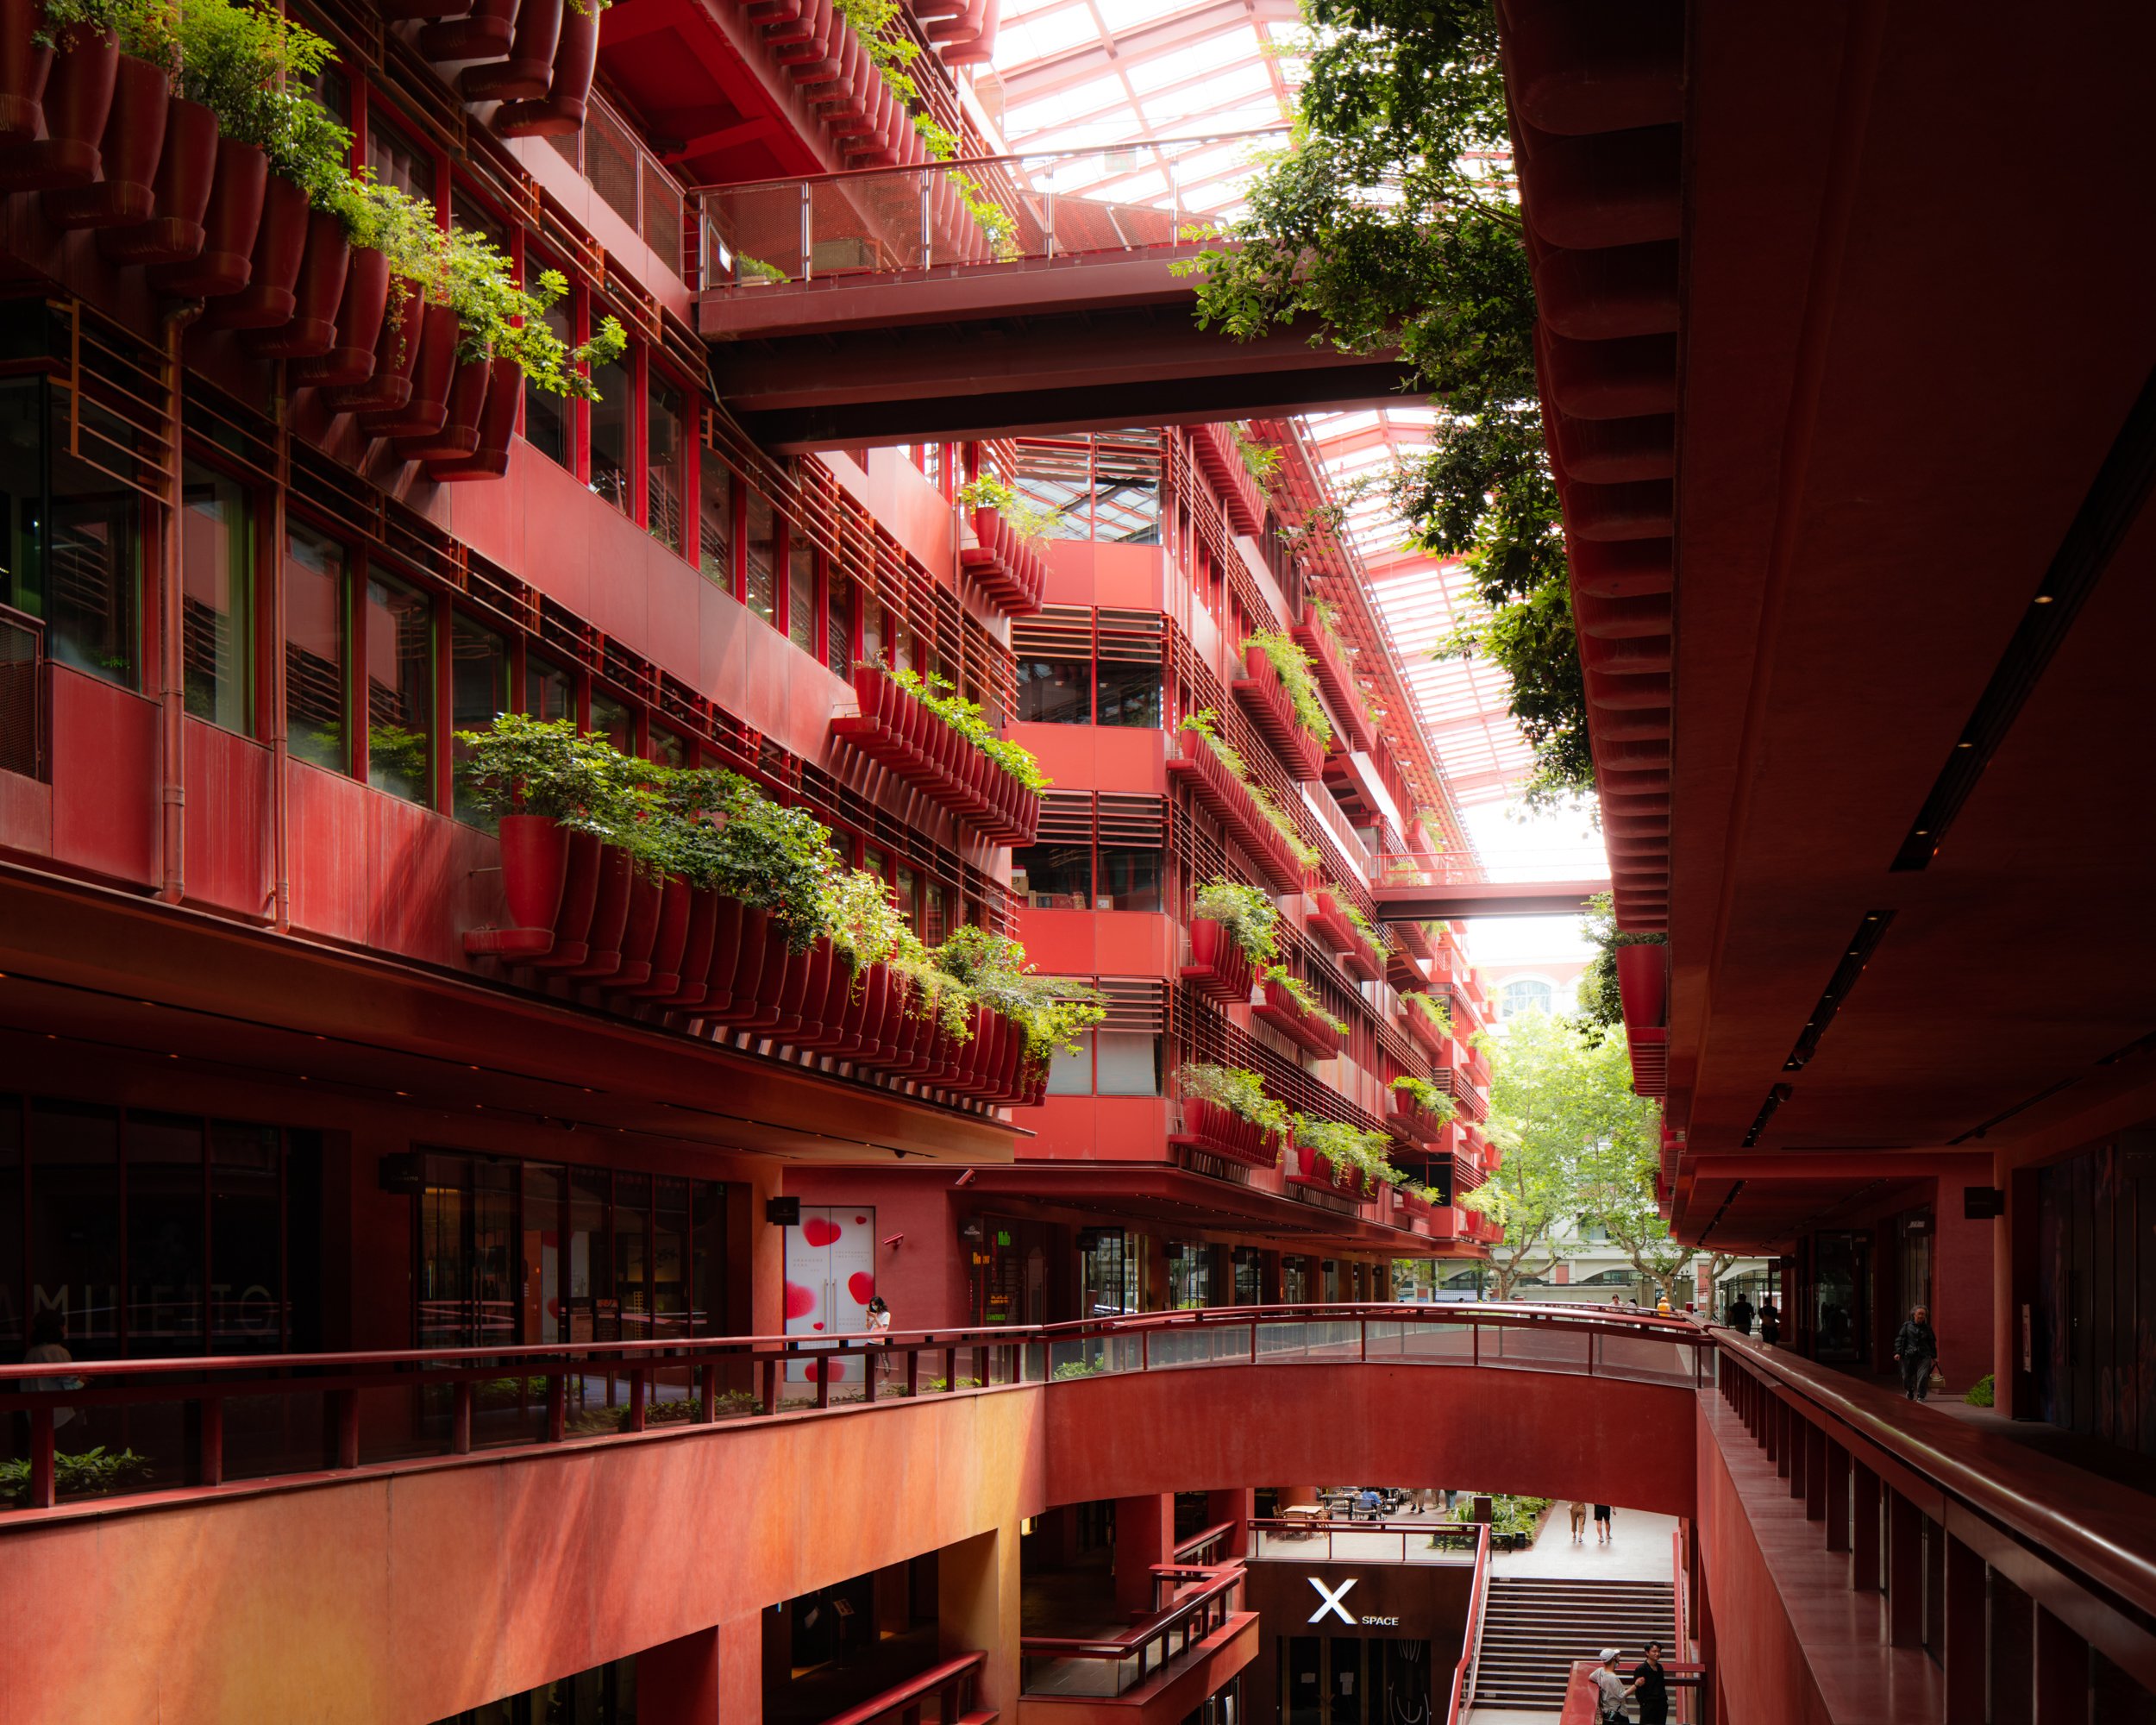  Henderson Cifi Tiandi - The Roof Design by Ateliers Jean Nouvel Landscape Design by Aspect Studios  Shanghai  